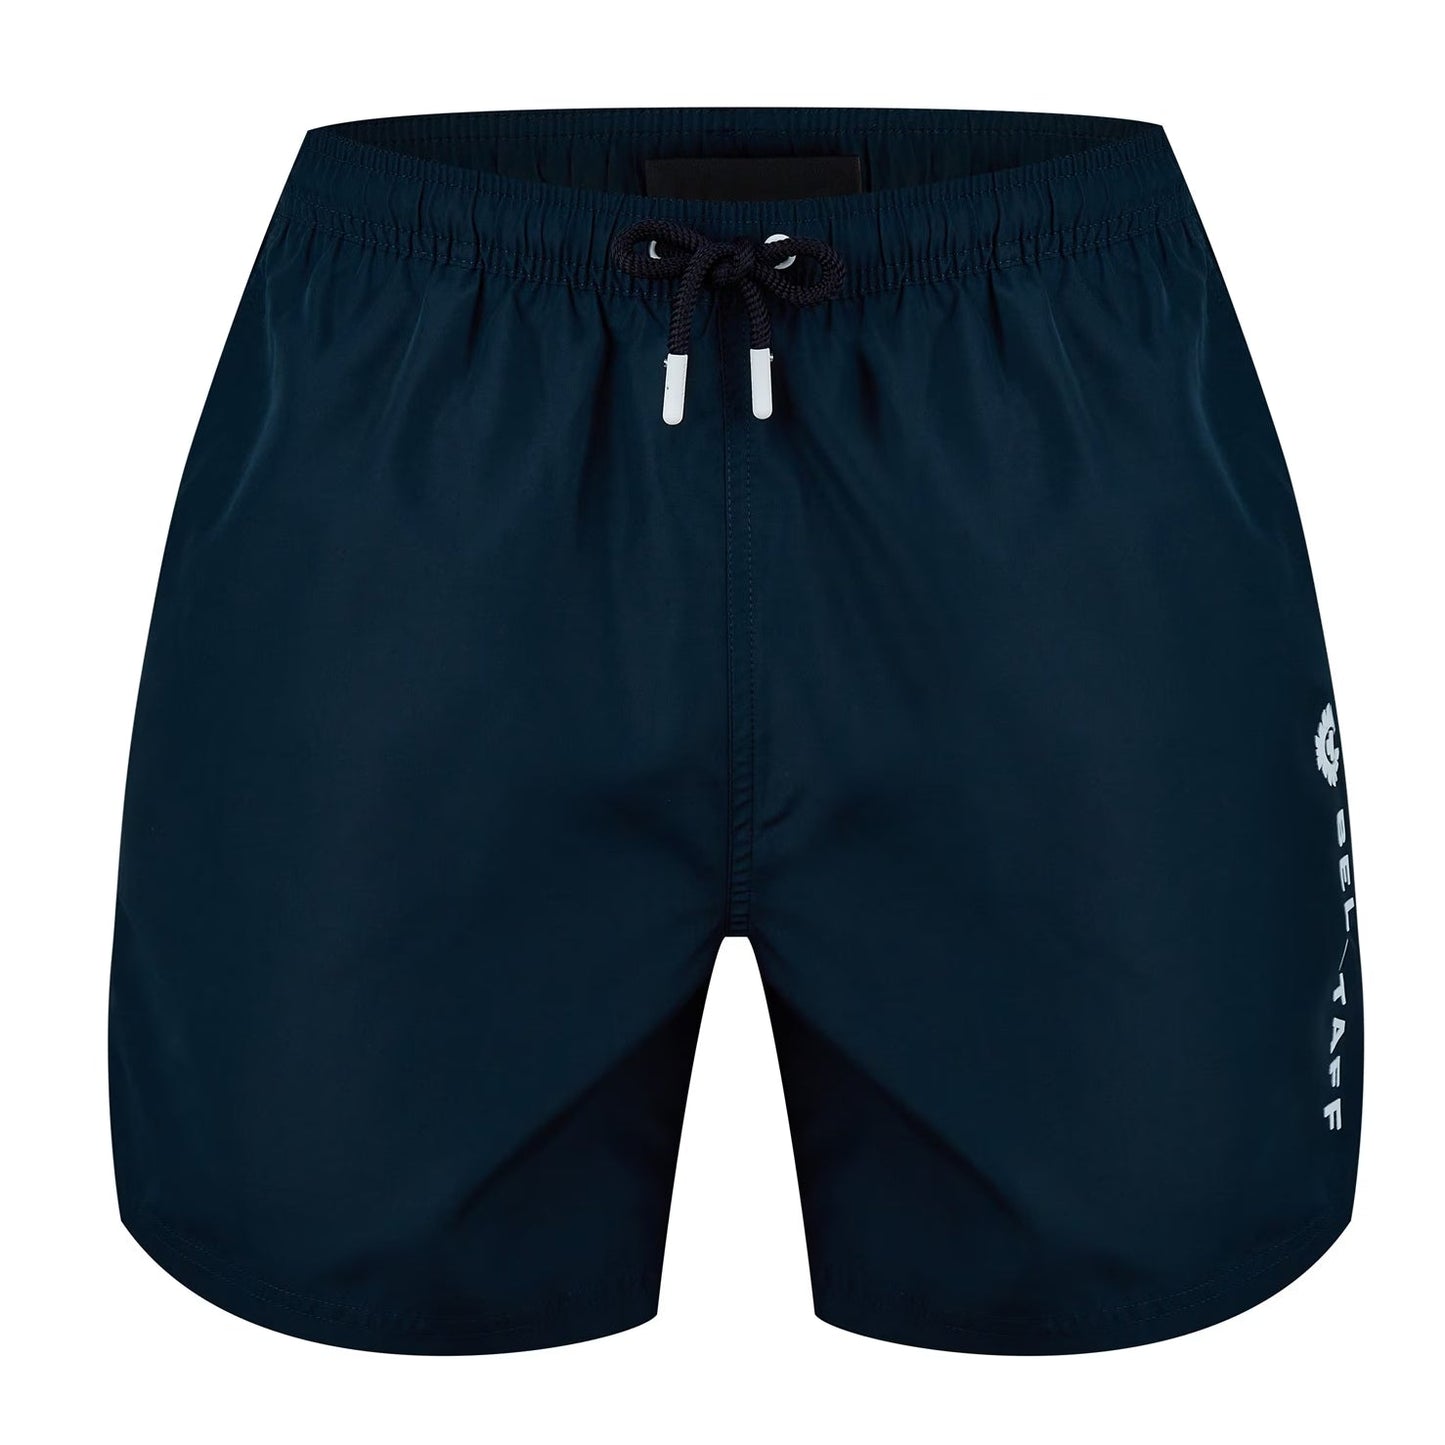 Belstaff Tiller Swim shorts - Dark Ink - Escape Menswear